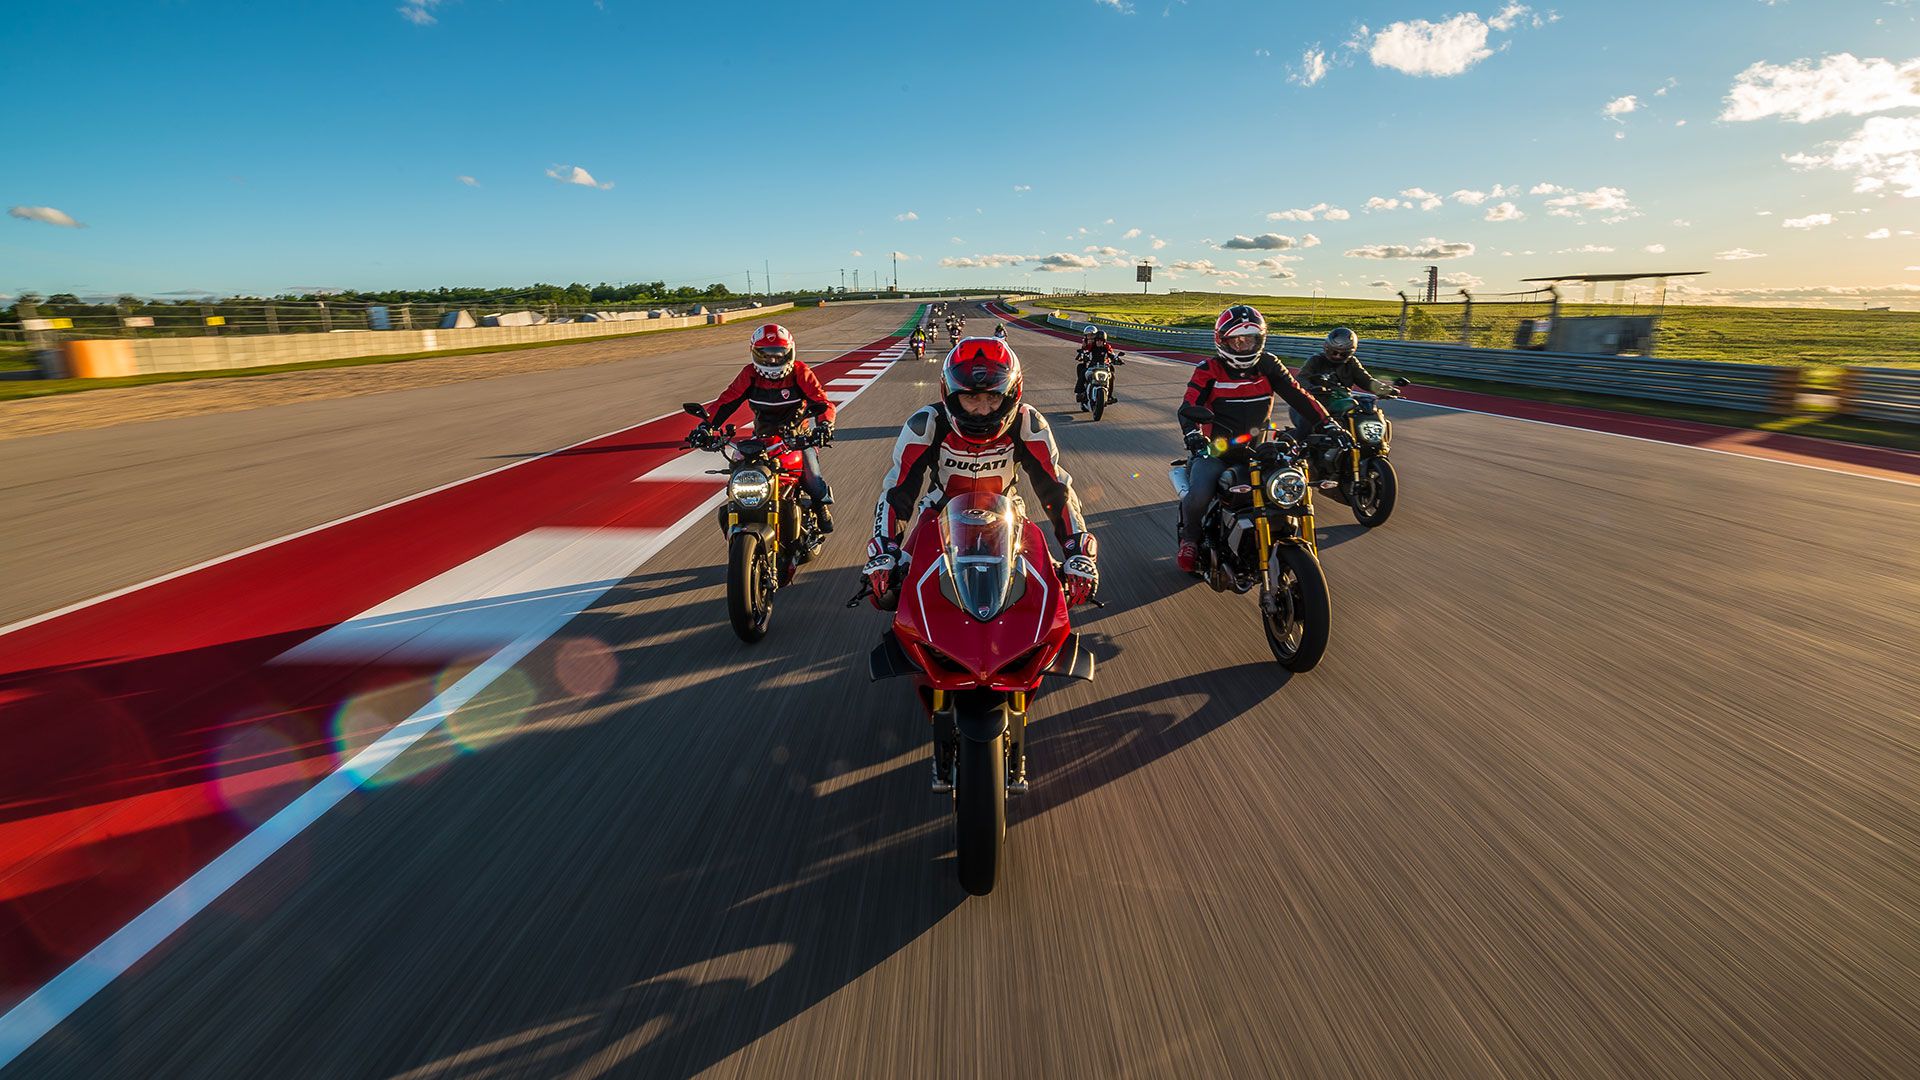 Experience The Cota Motogp With A Ducati Flair Blogpost EatSleepRIDE